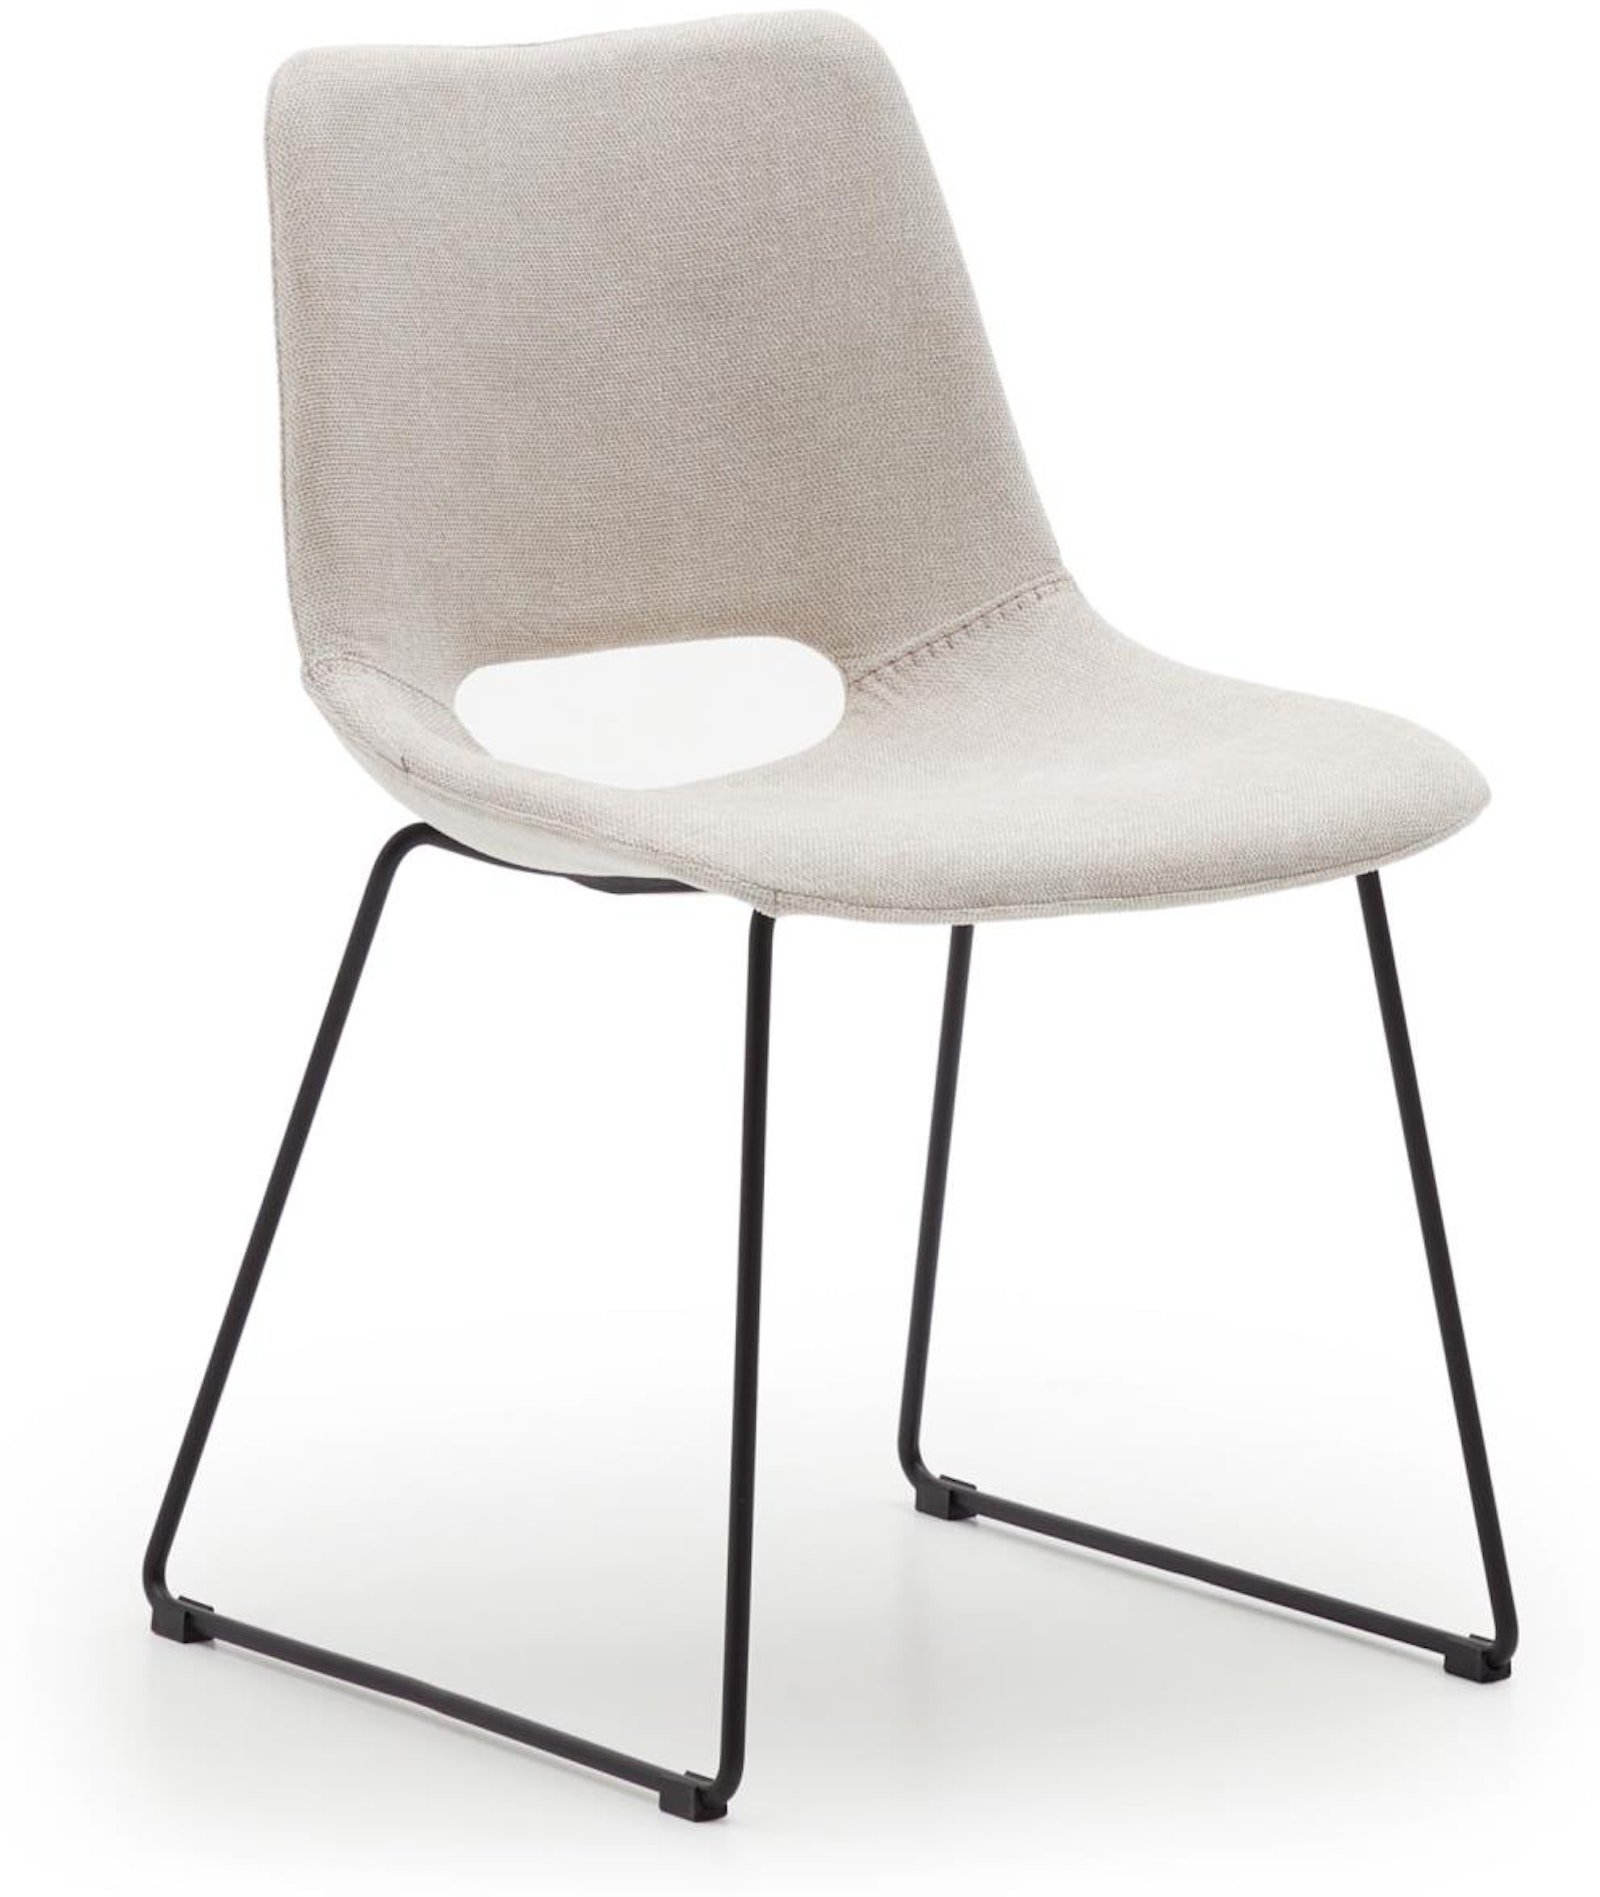 Zahara, Spisebordsstole, moderne, nordisk, rustik, stof by Laforma (H: 78 cm. x B: 49 cm. x L: 55 cm., Beige)